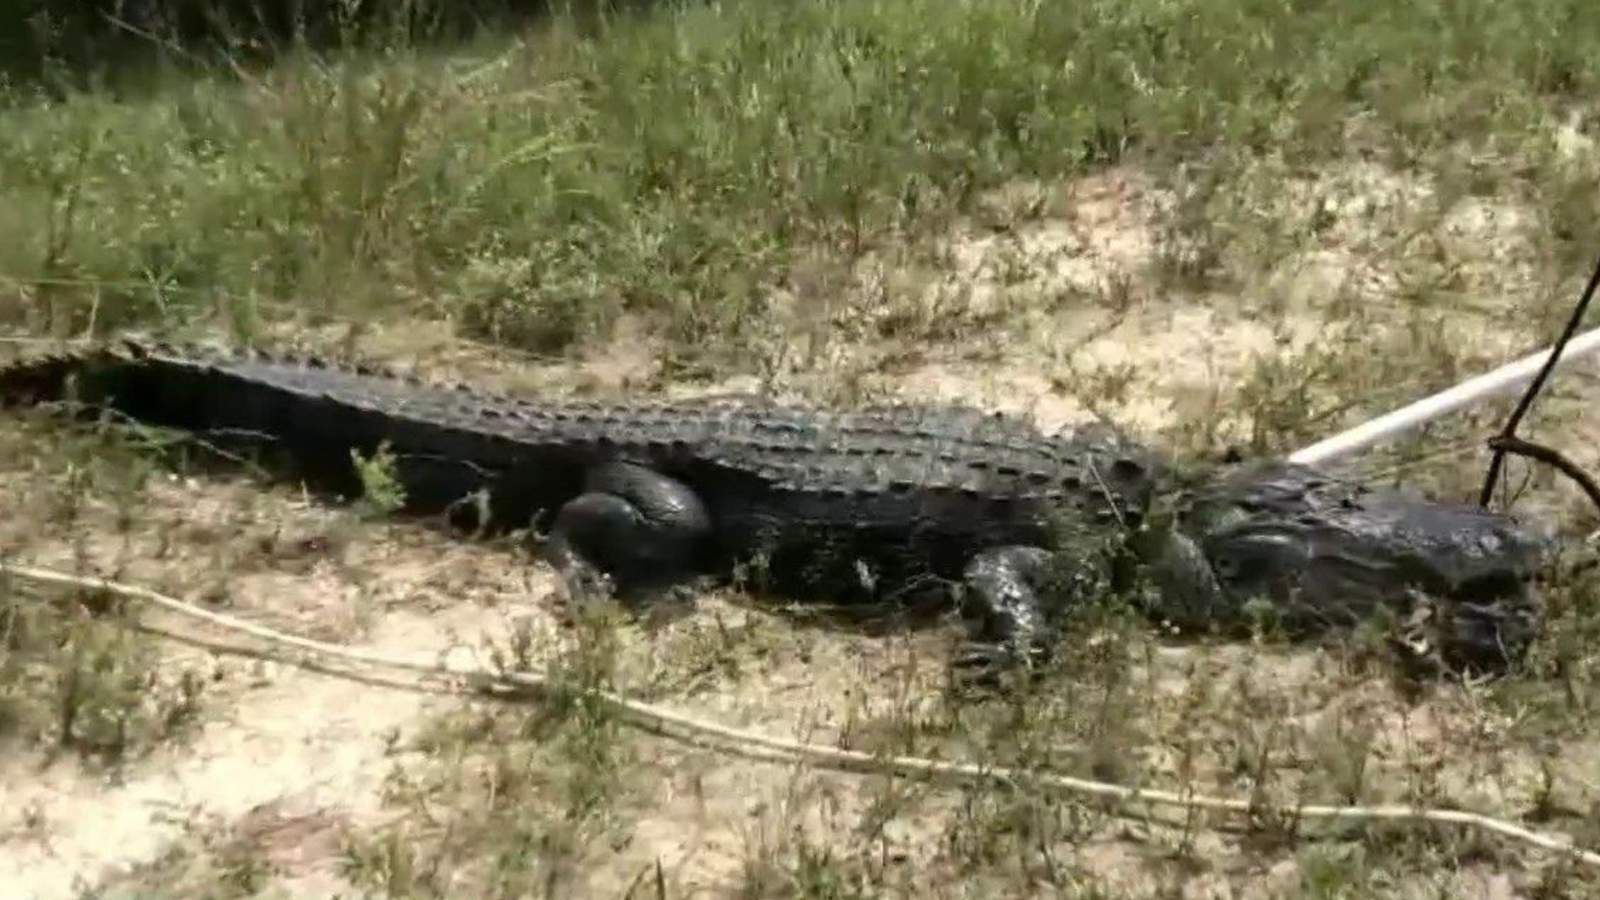 10-foot alligator attacks Florida teen walking near pond